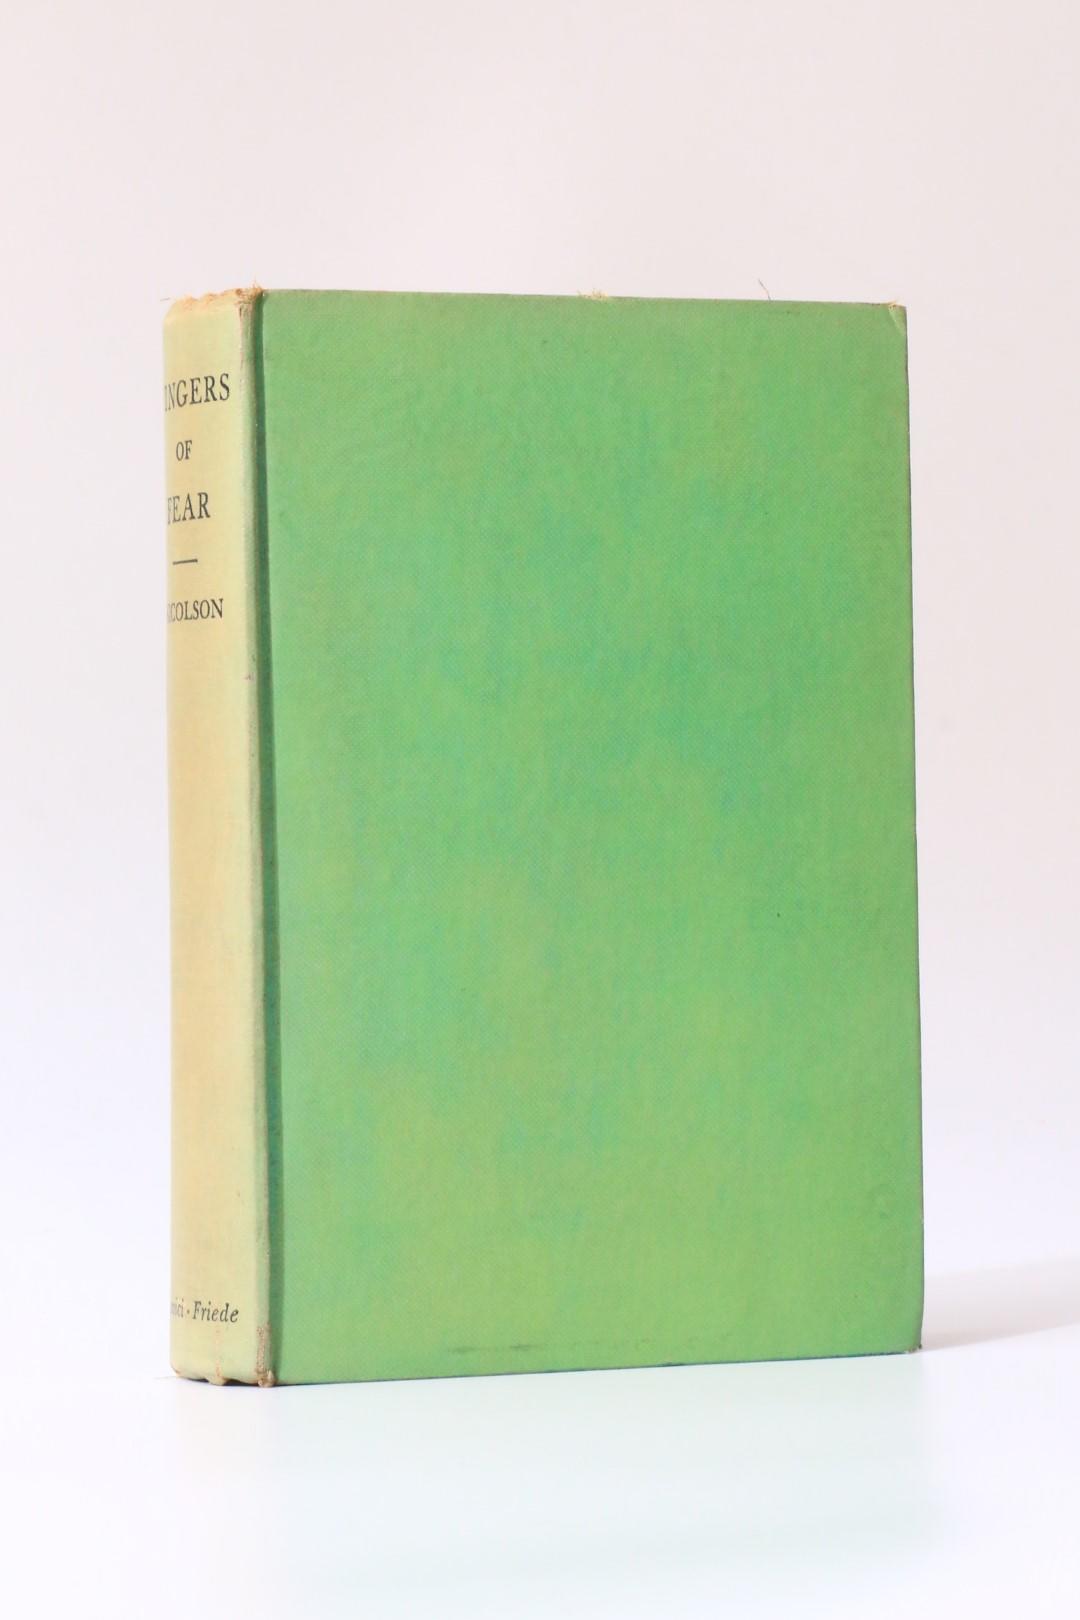 J.U. Nicolson - Fingers of Fear - Covici Friede, 1937, First Edition.